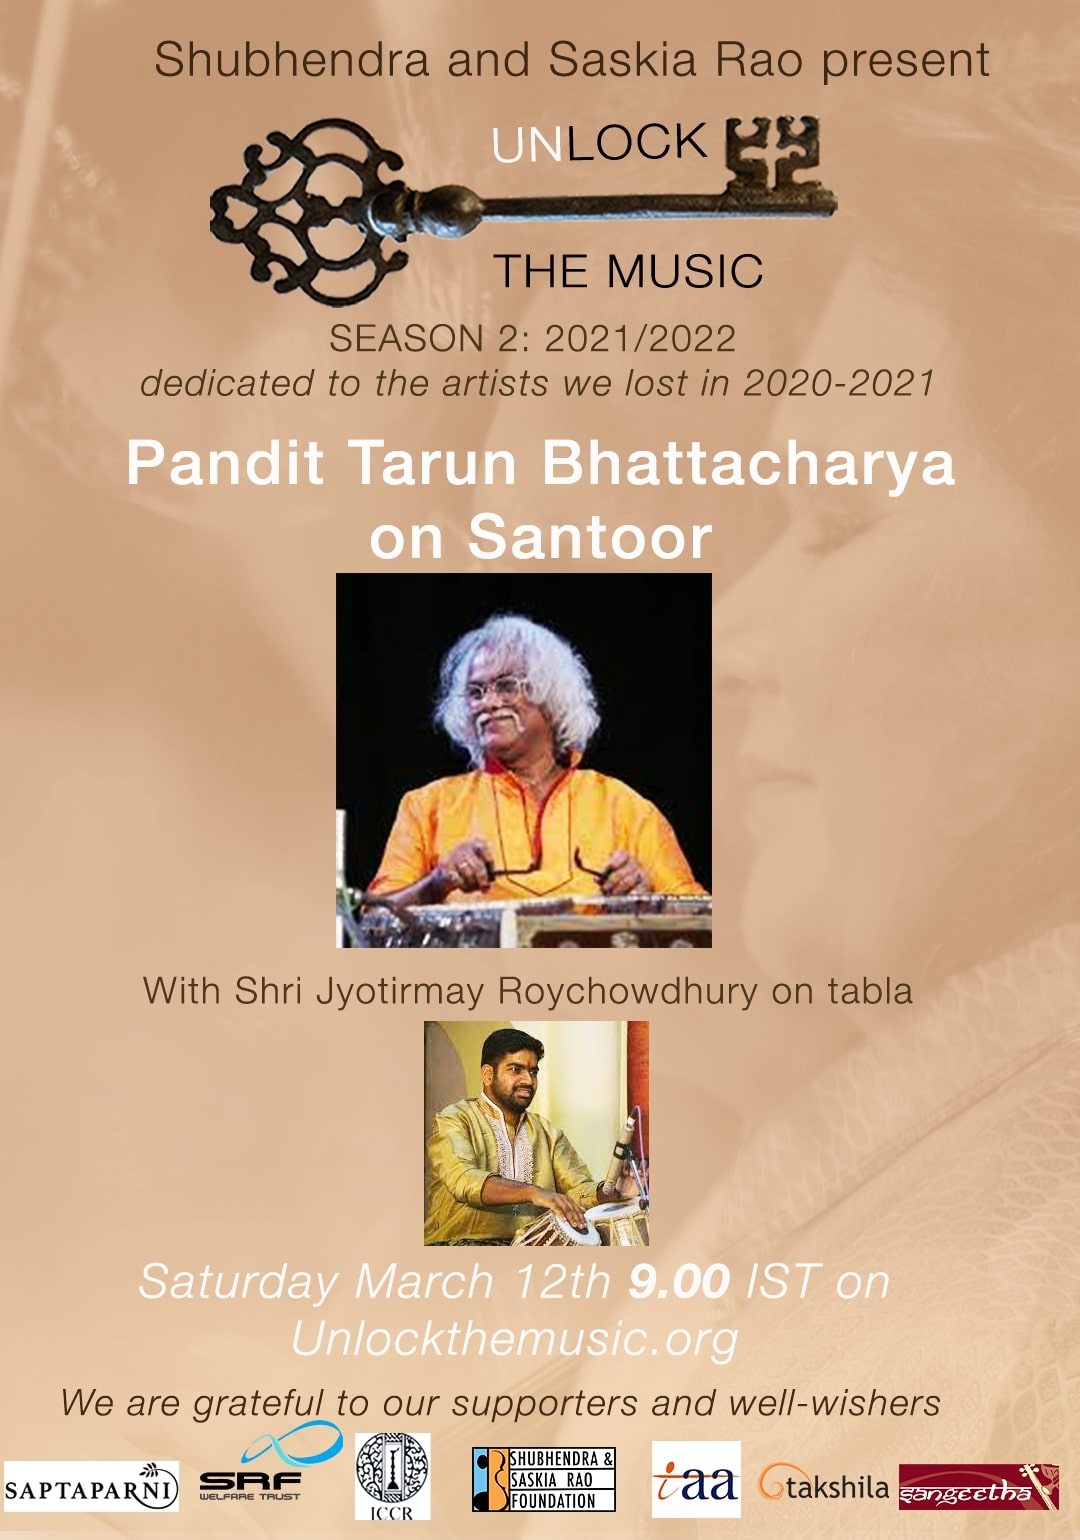 Virtual Live Unlock the Music Concert: Santoor Recital by Pandit Tarun Bhattacharya accompanied by Shri Jyotirmoy Roy Chowdhury on Tabla on 12 March 2022 at 1630 hrs